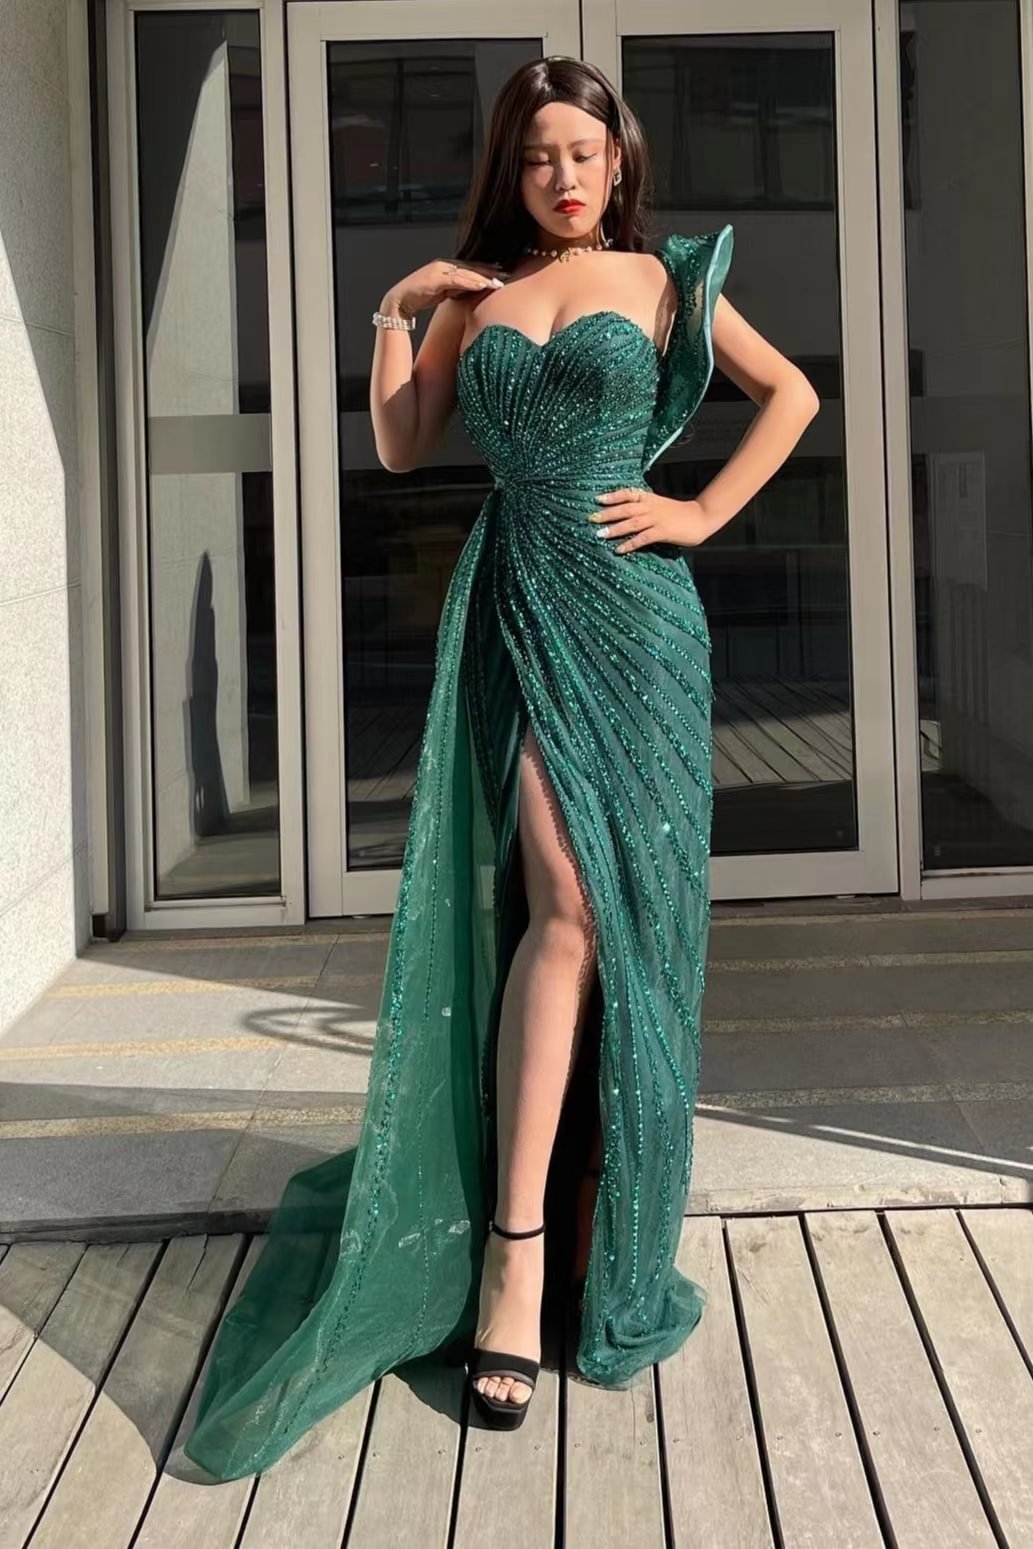 Glamorous Emerald Sweetheart Mermaid Prom Dress One Shoulder With Slit Sequins |Ballbellas Ballbellas